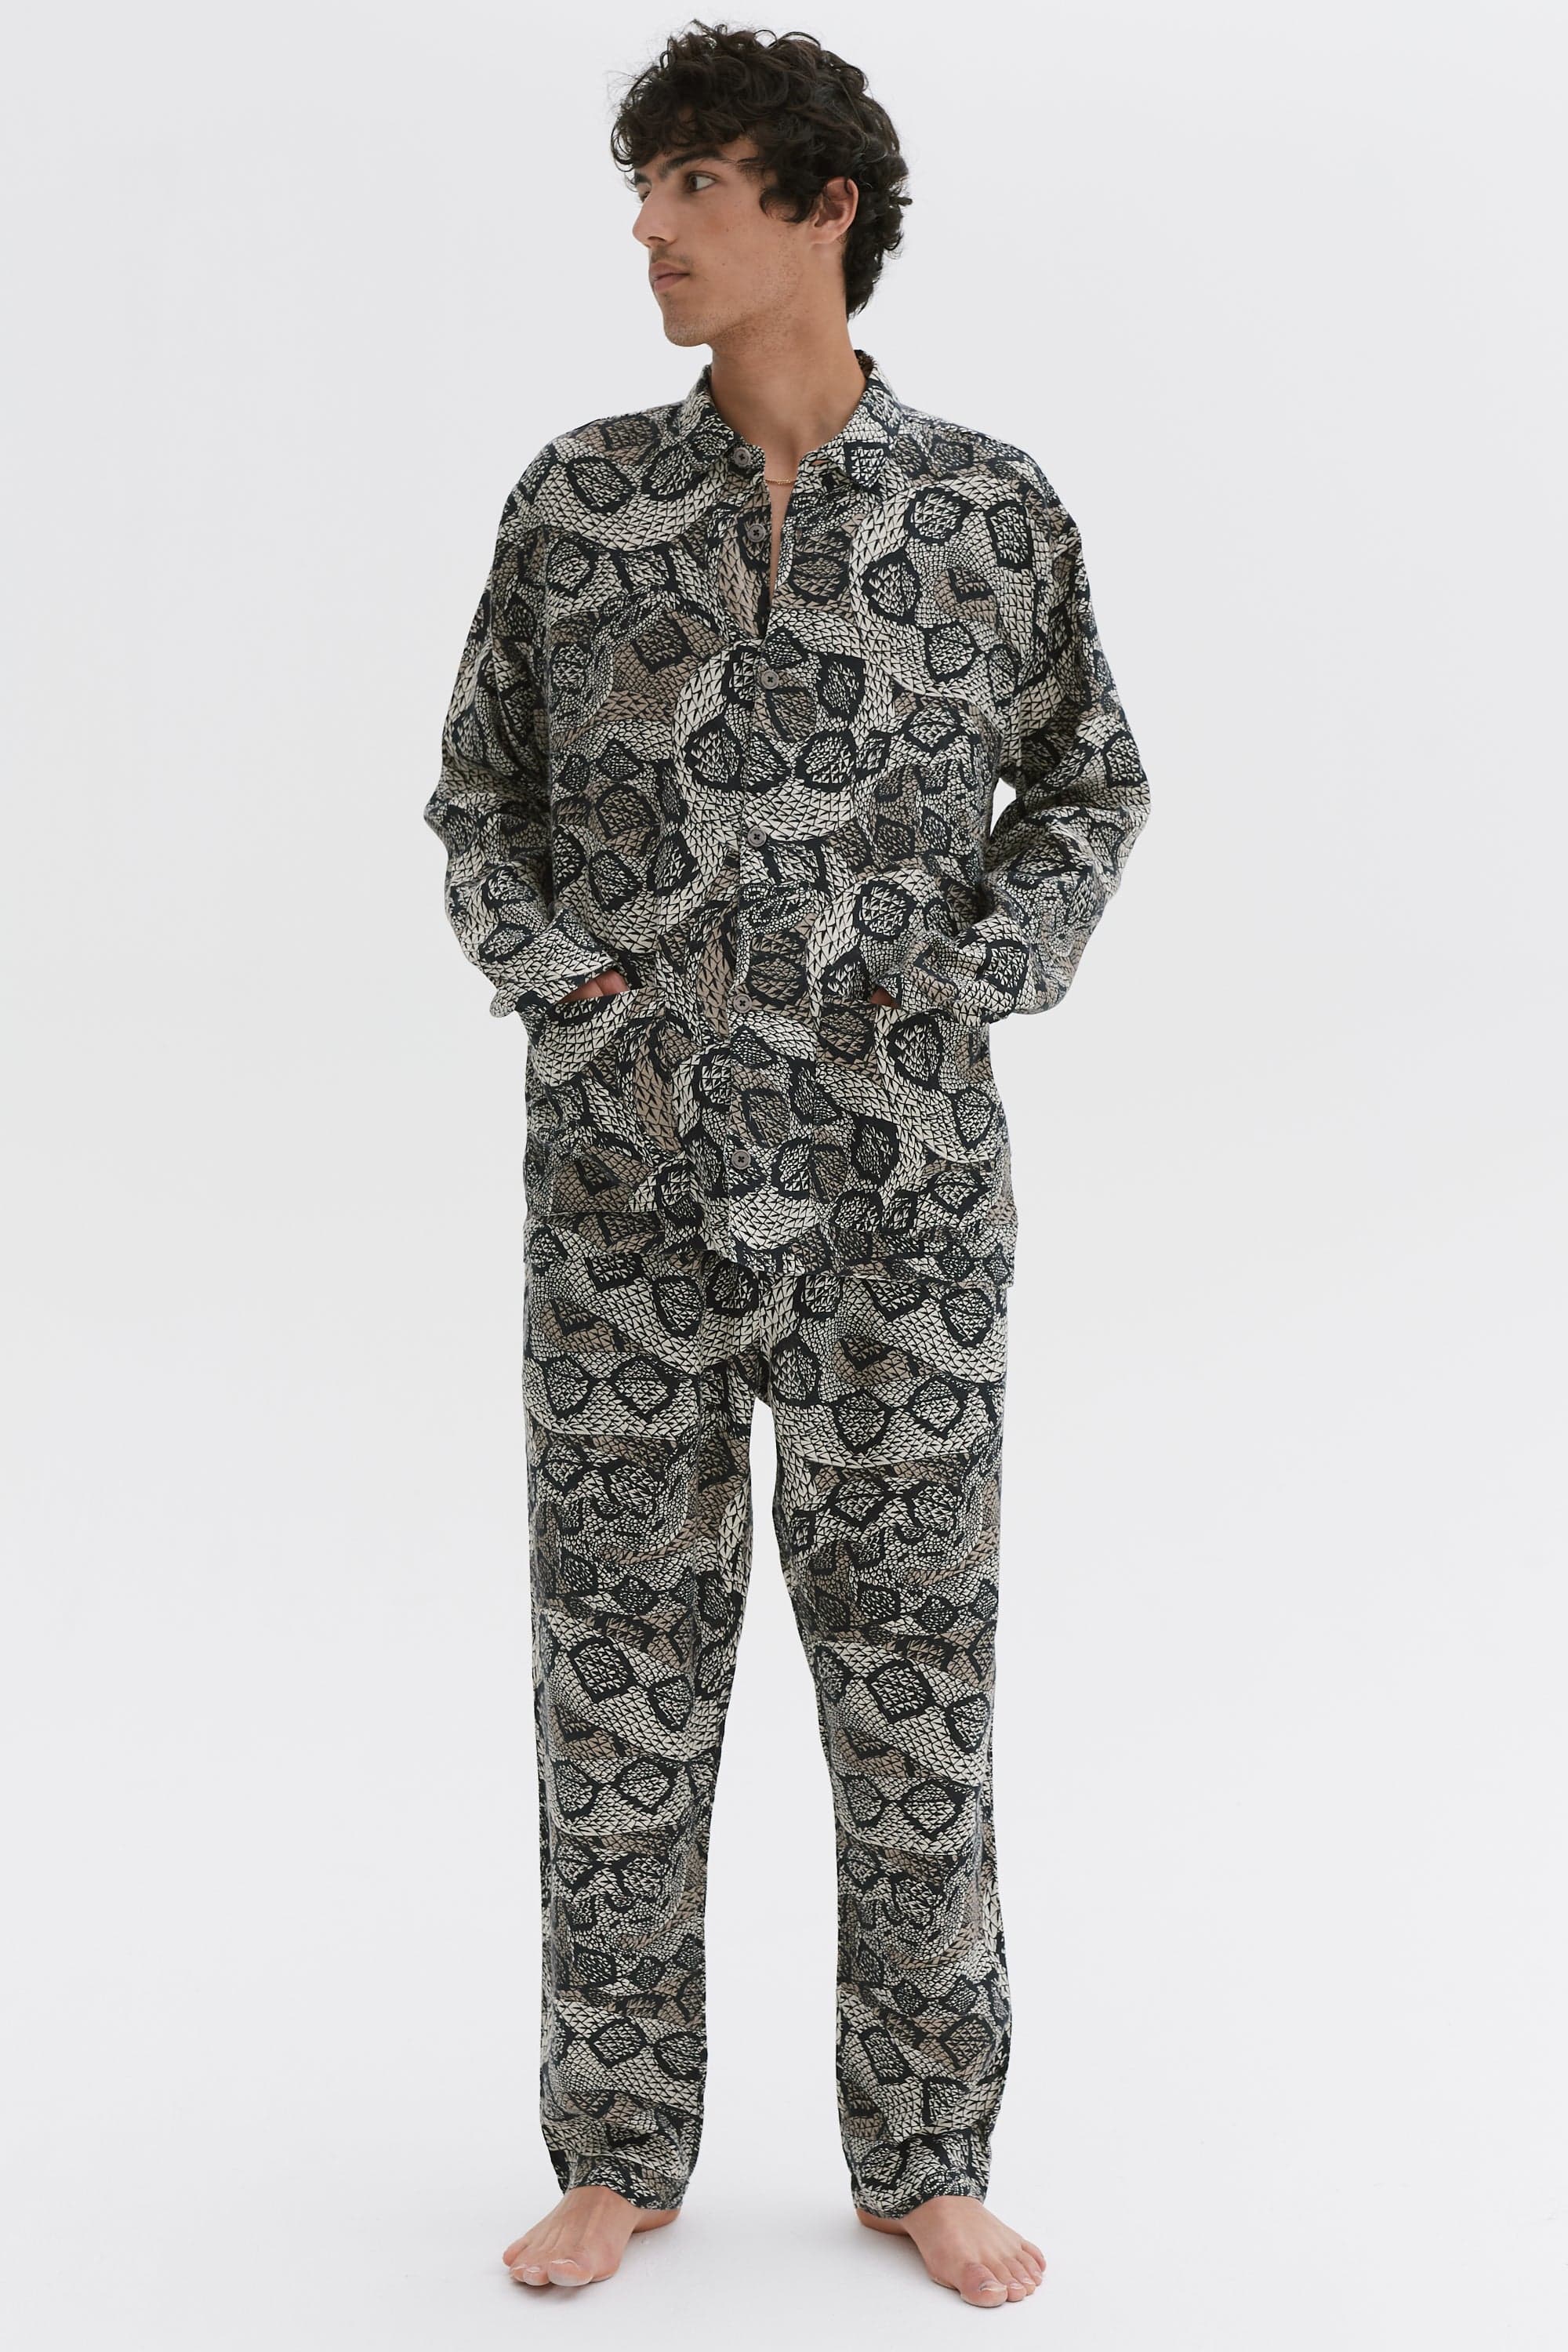 Desmond & Dempsey Men's Pocket Pajama Set